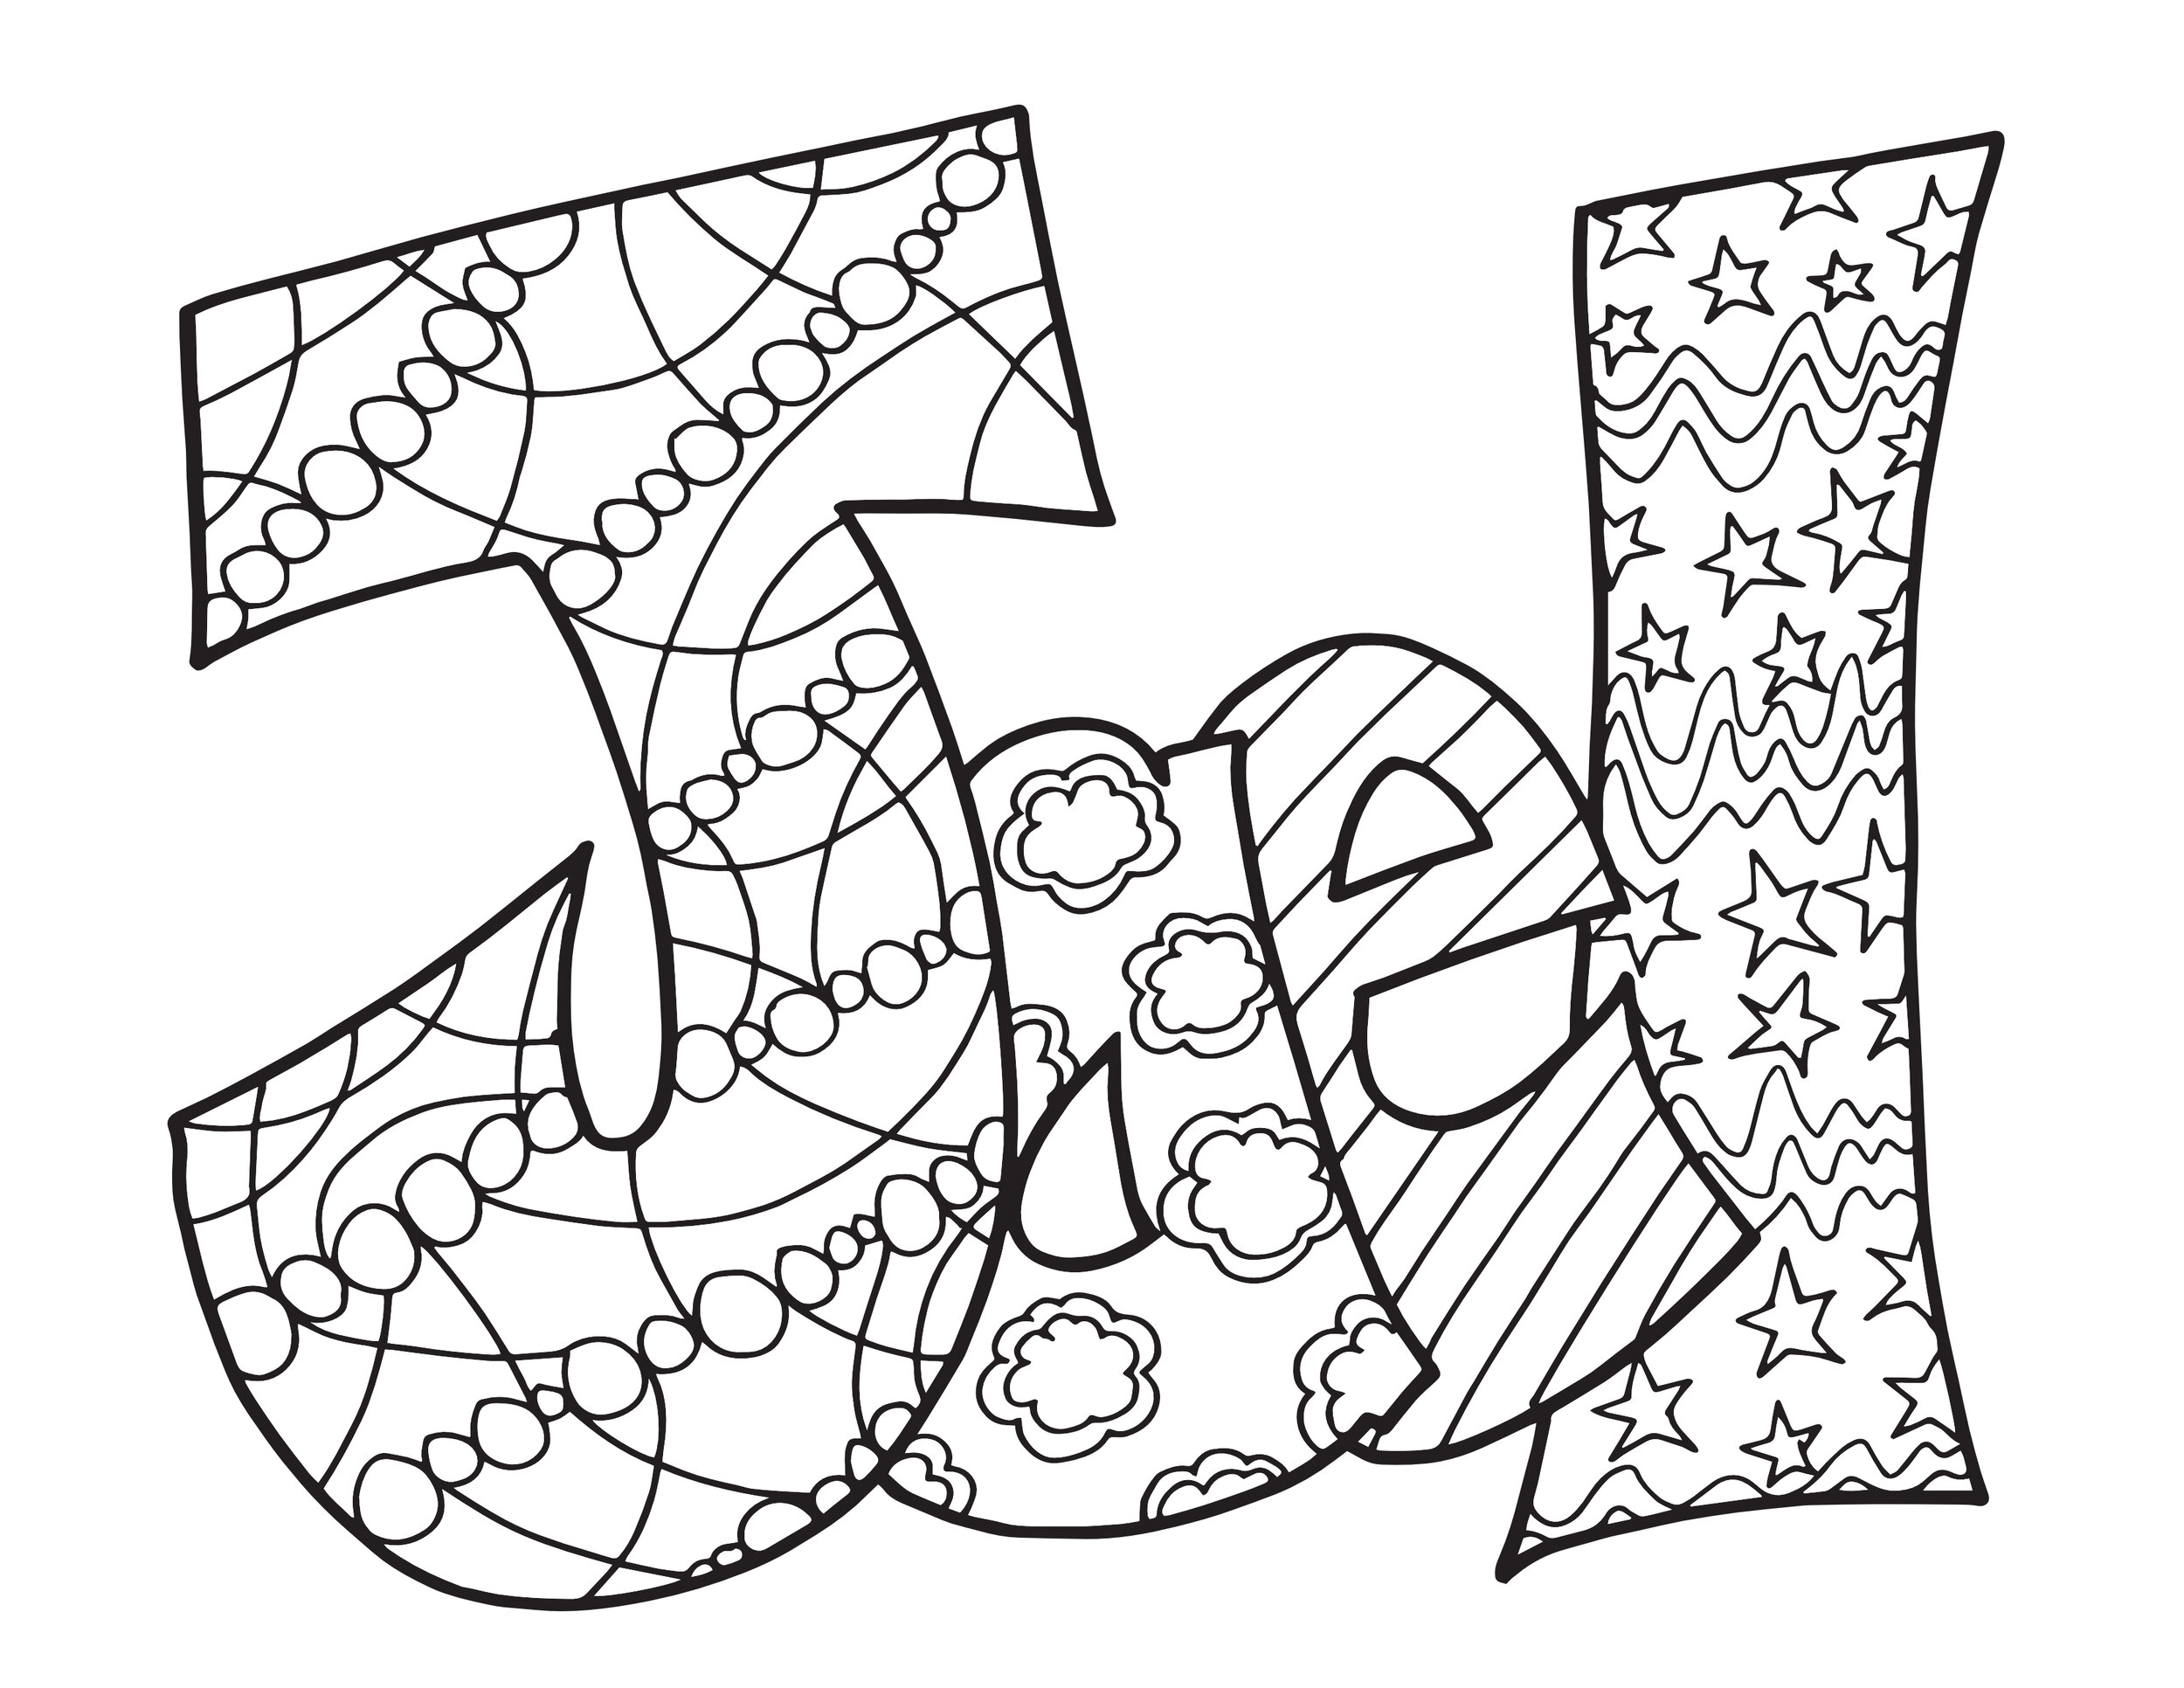 jael-classic-doodle-free-coloring-page-stevie-doodles